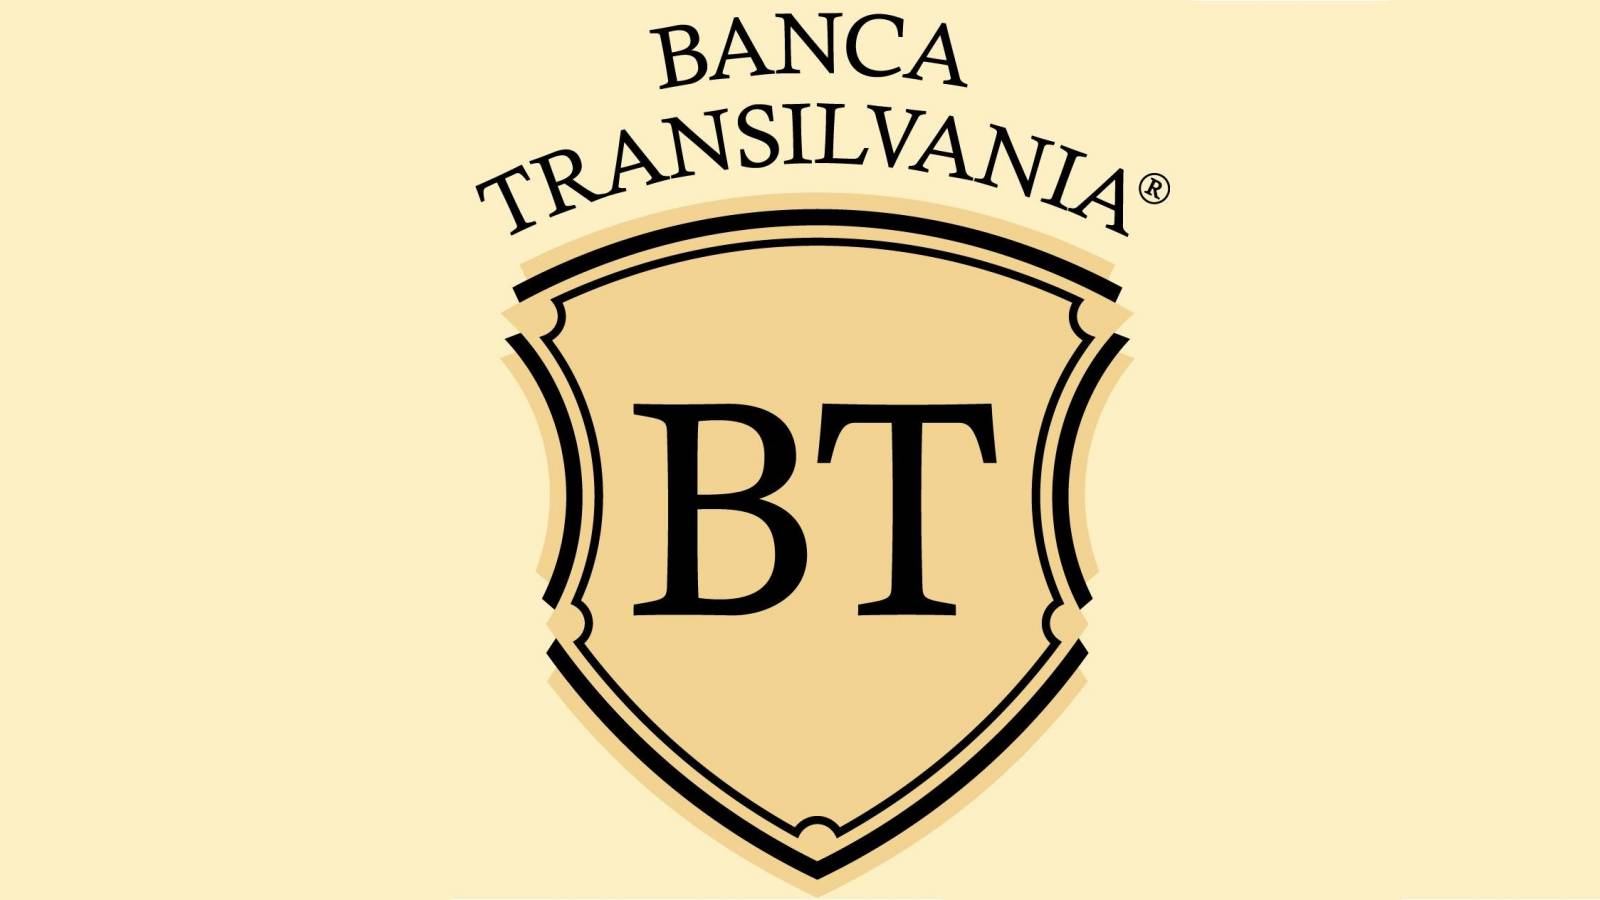 BANCA Transilvania brigade